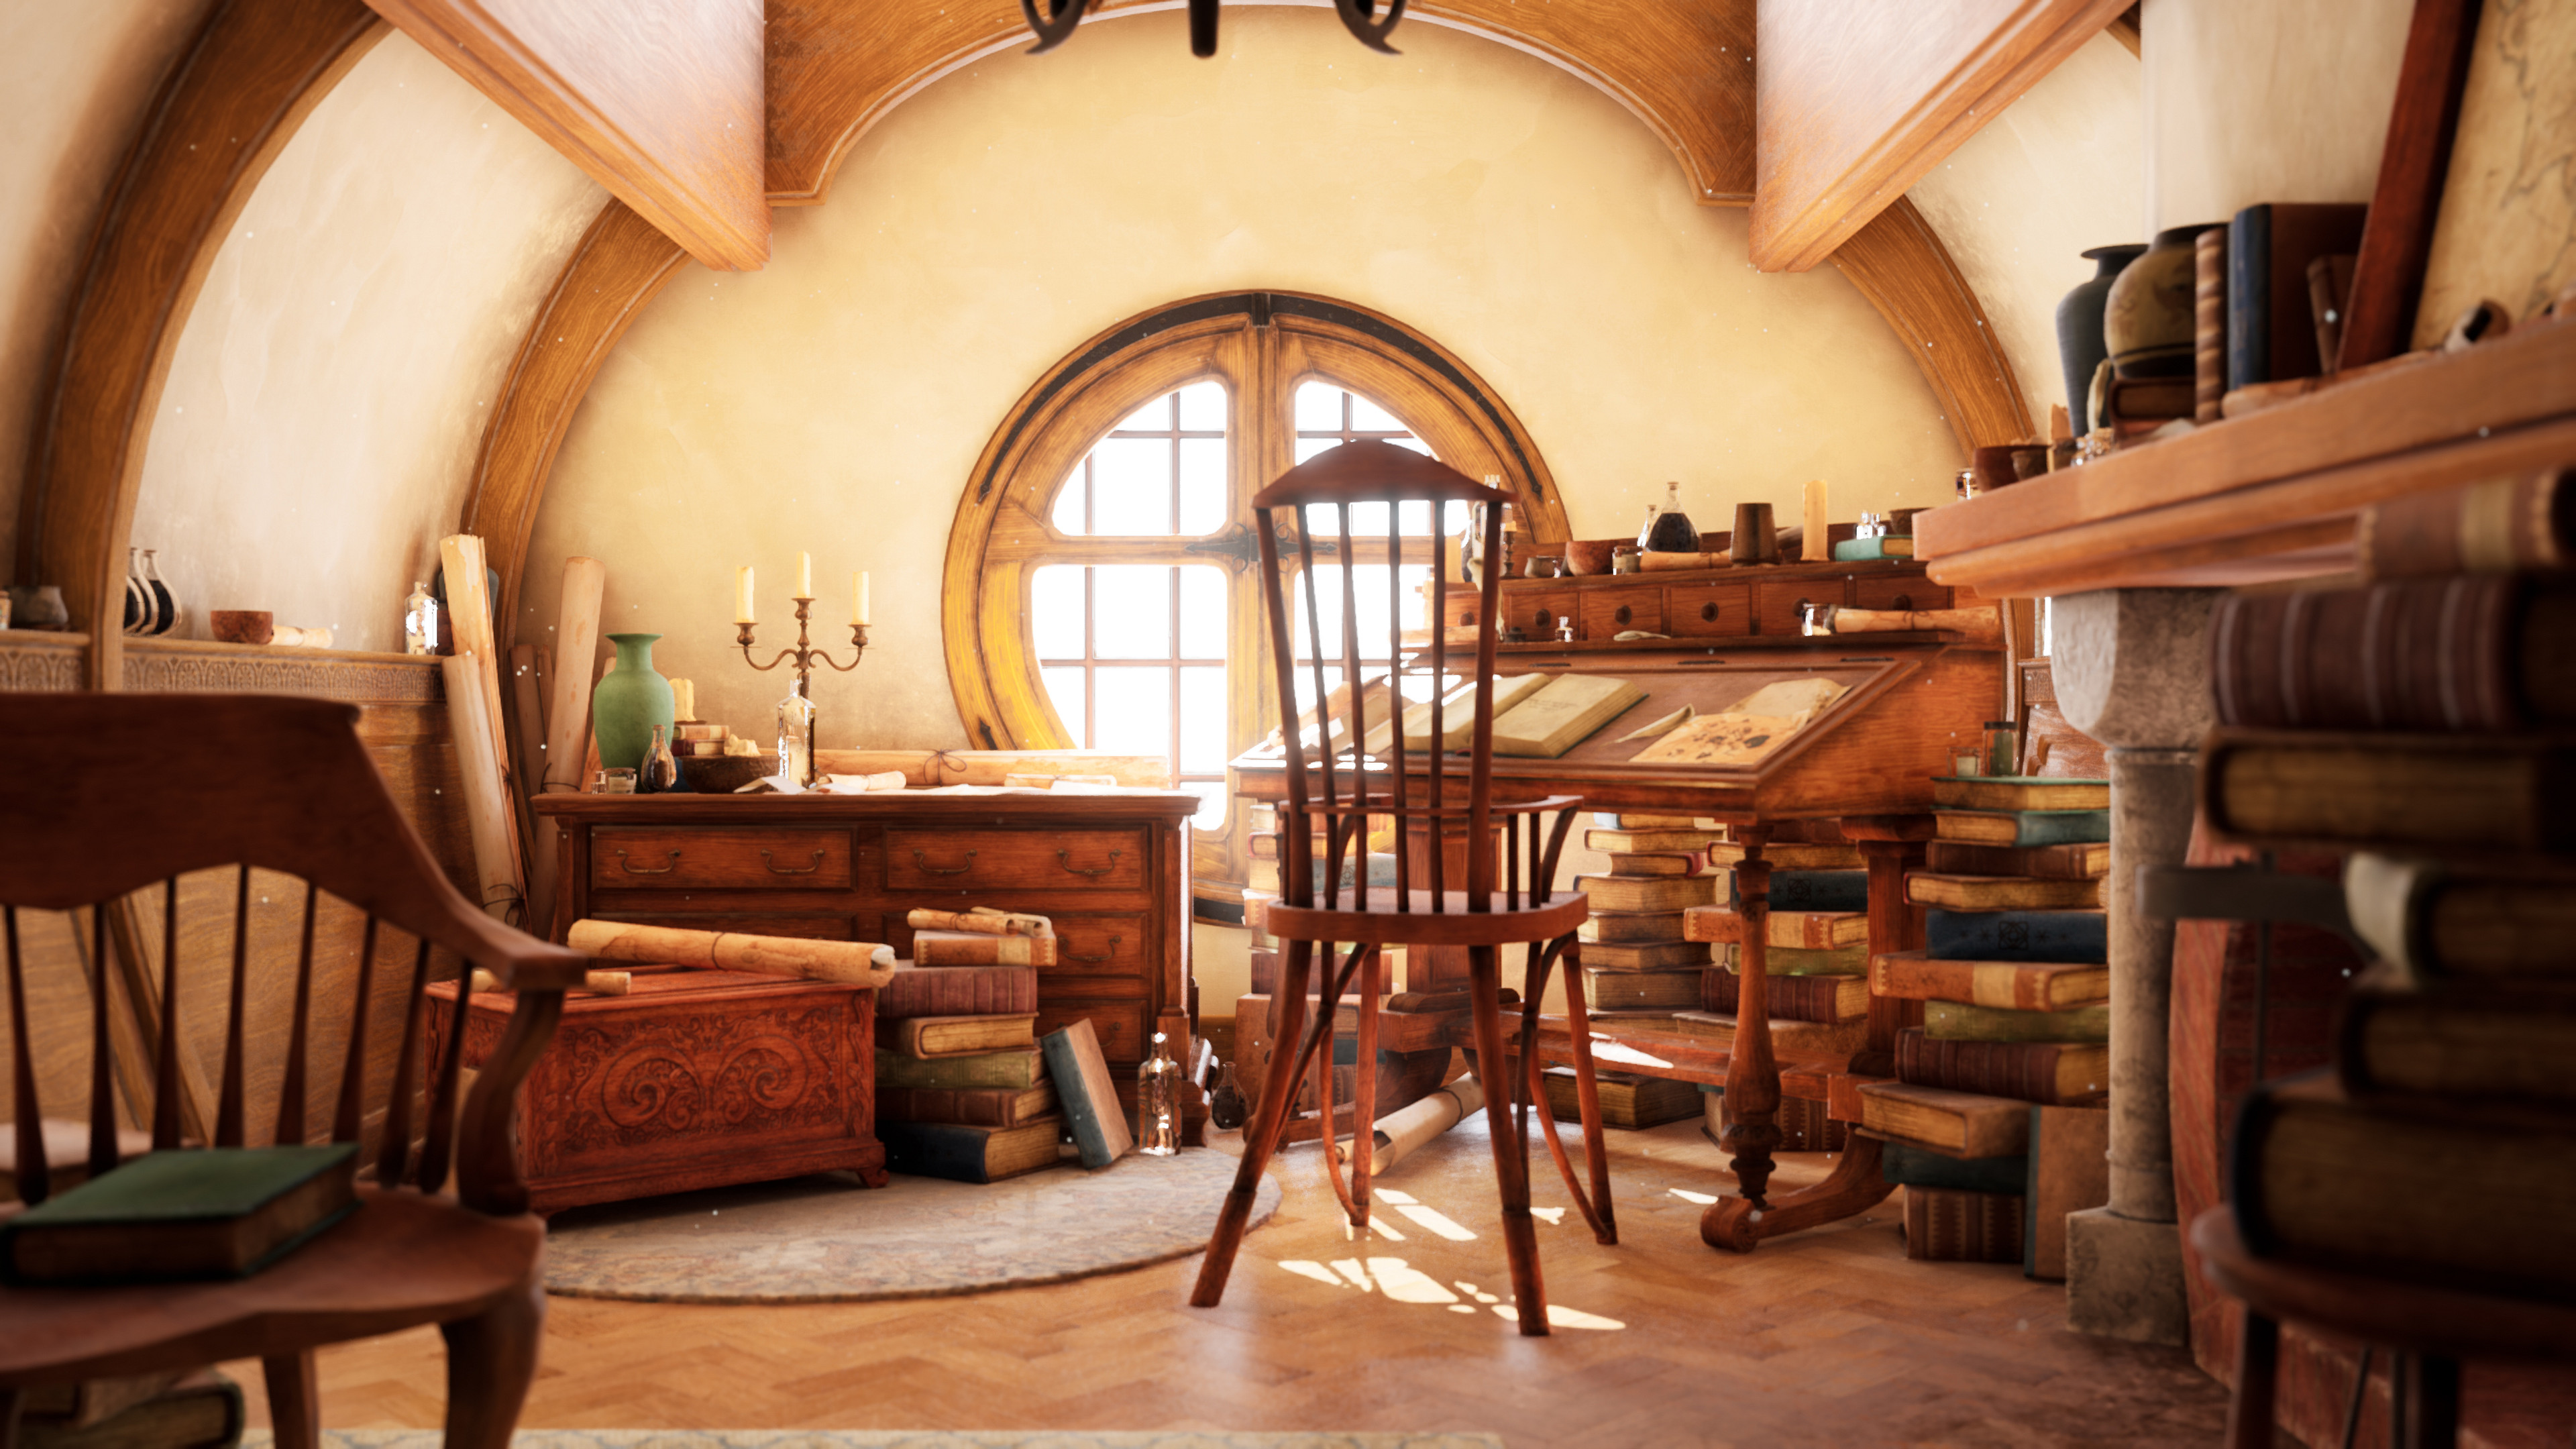 Diy hobbit house || hobbit hole || fairy house making idea at home || craft  ideas || crafty hands - YouTube